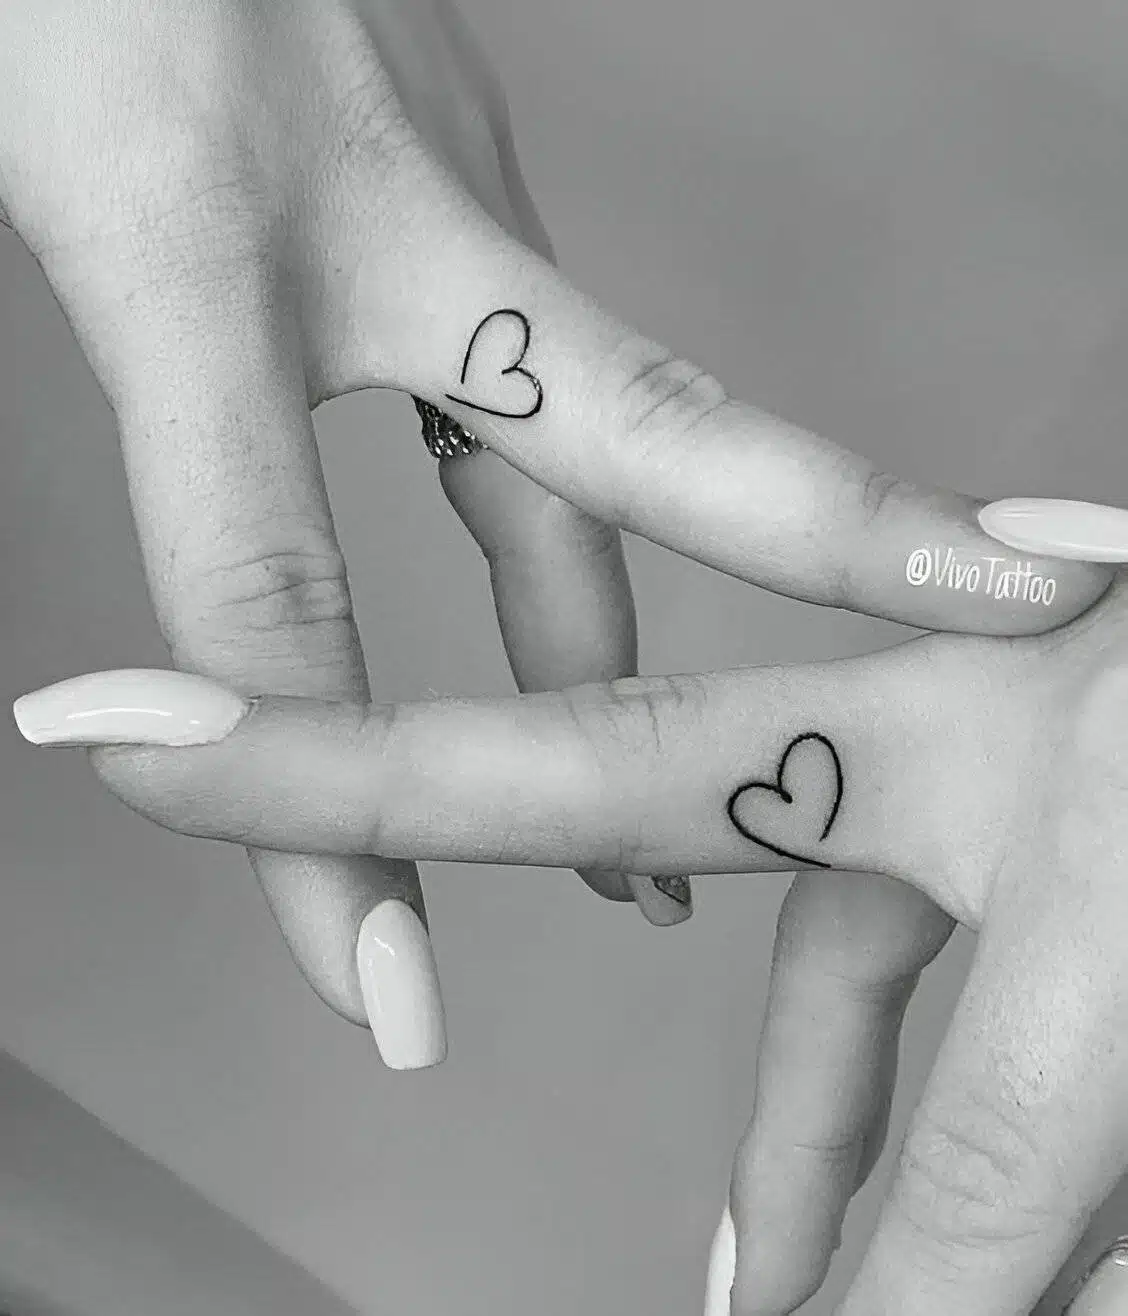 25 Feminine Tattoo Ideas That Are Small But Oh So Pretty - 203